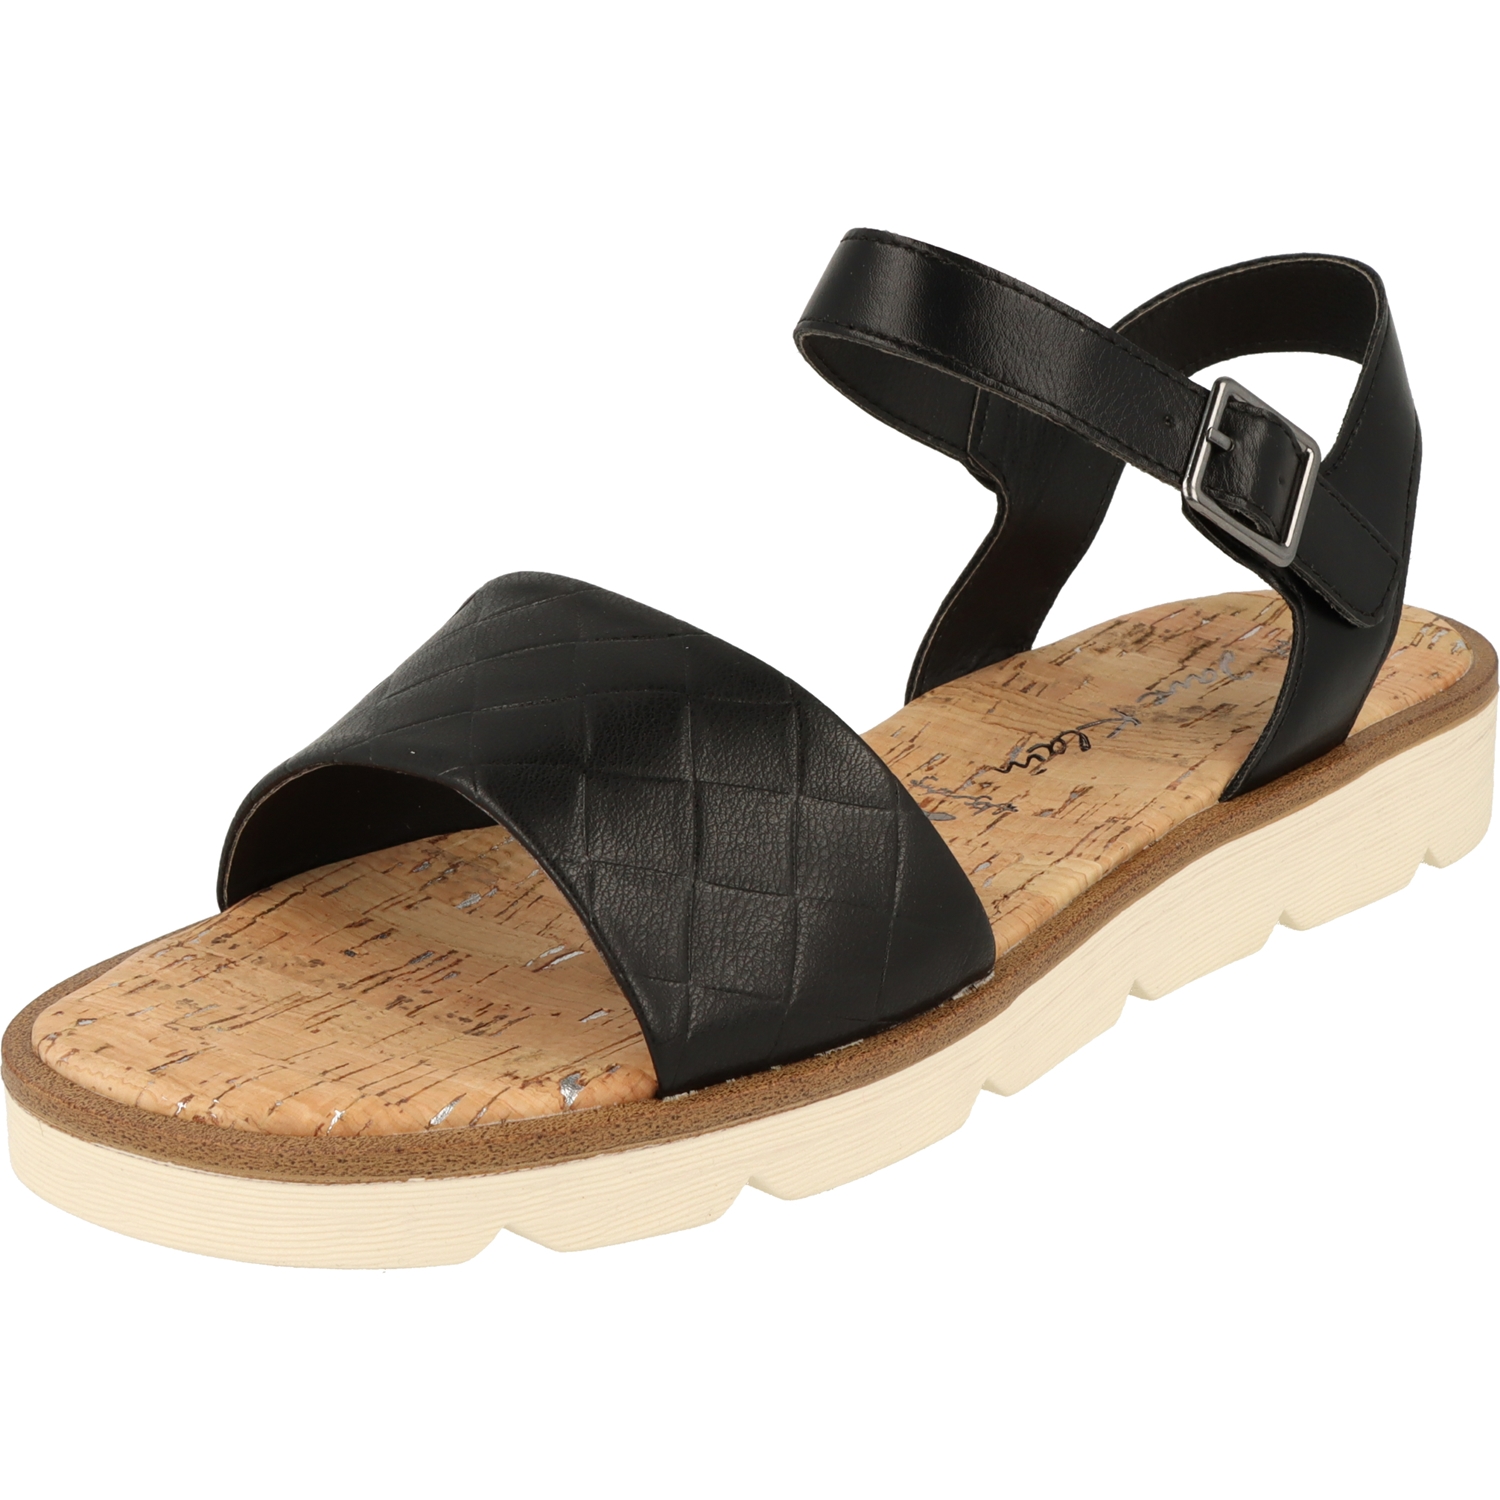 Jane Klain Damen Schuhe Sandale Sandalette 282-522 in Schwarz mit Schnalle